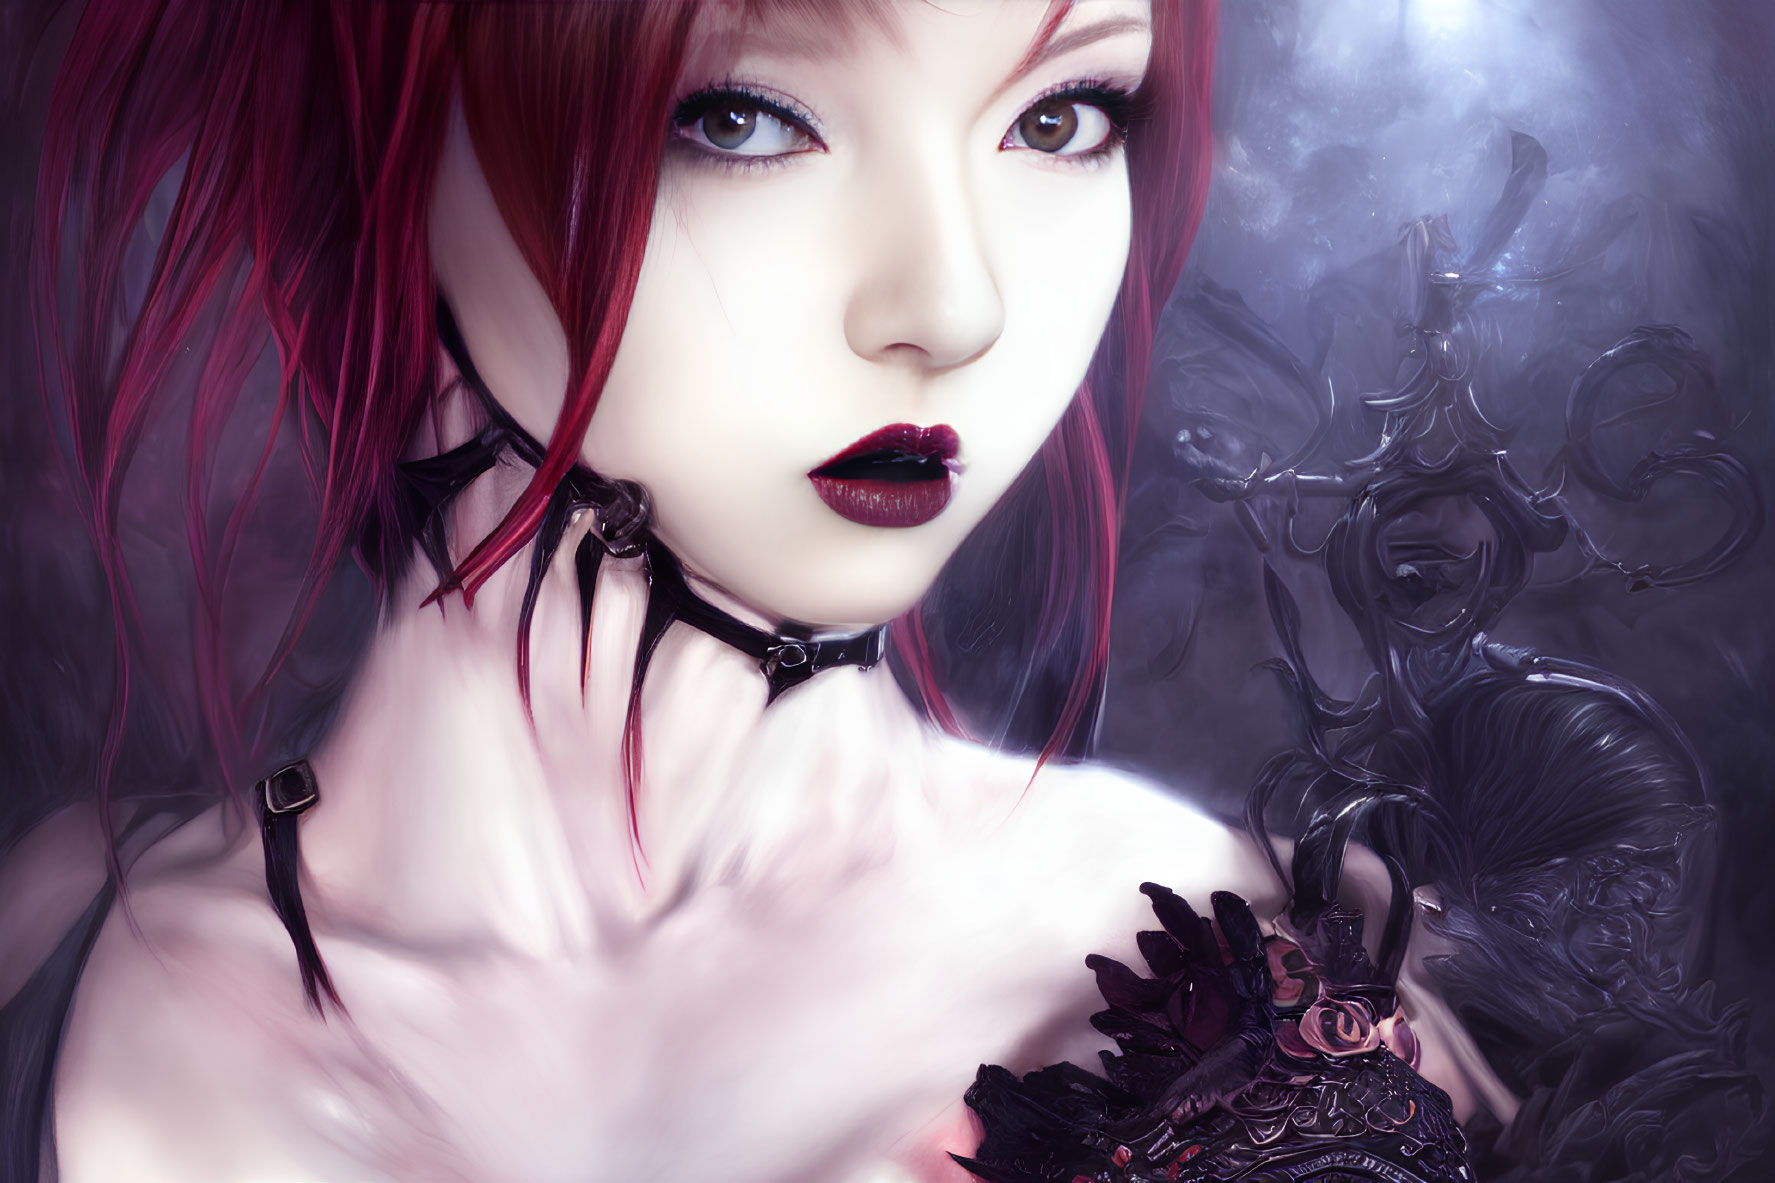 Digital artwork: Woman with red hair, choker, ornate gauntlet, on smoky purple